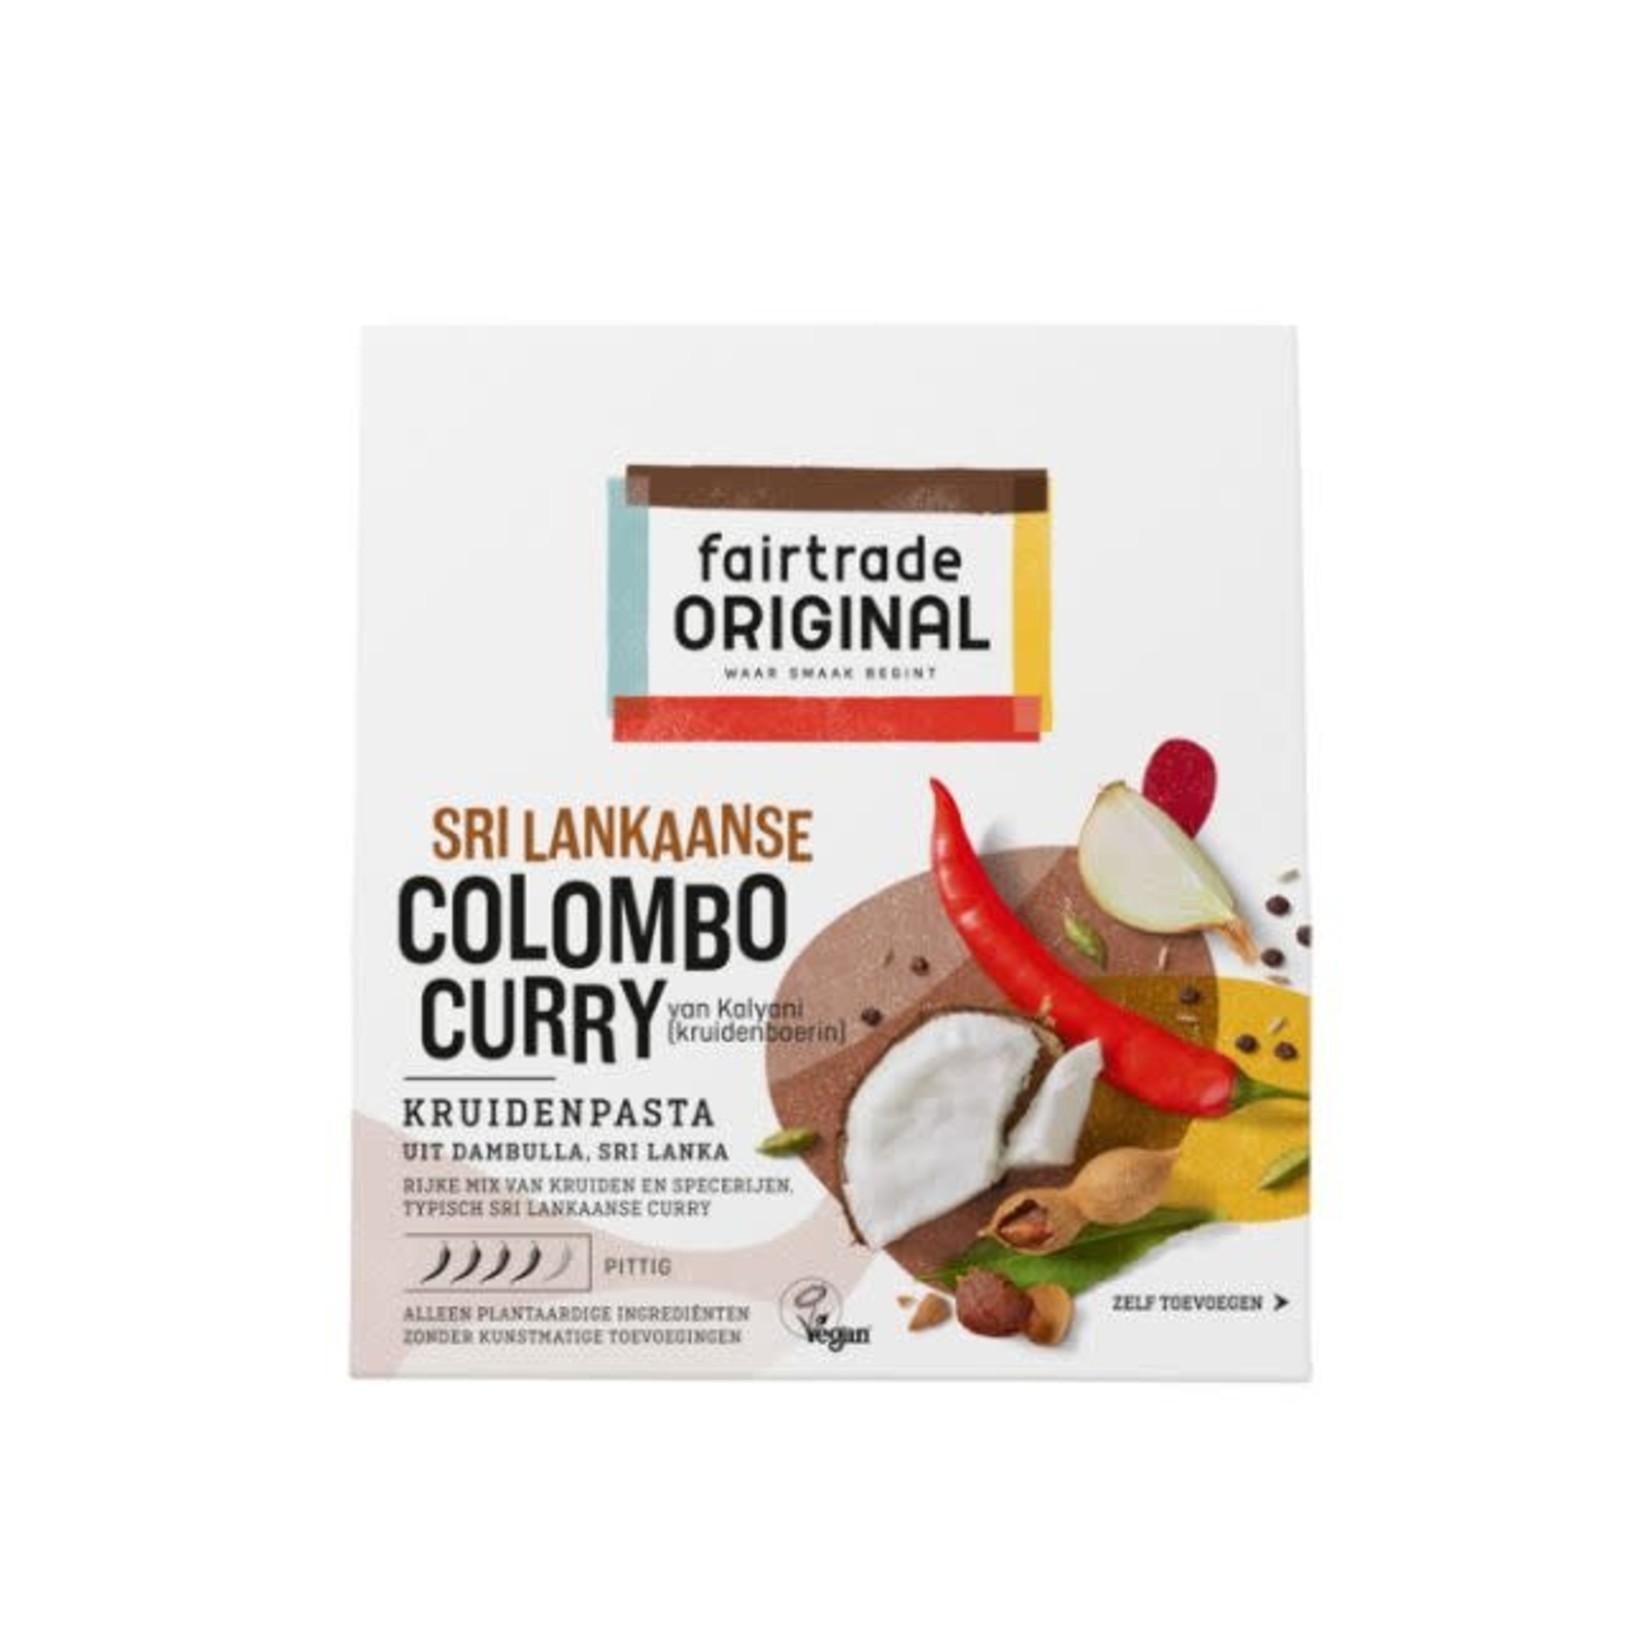 Fairtrade Original Sri Lankaanse Colombo curry